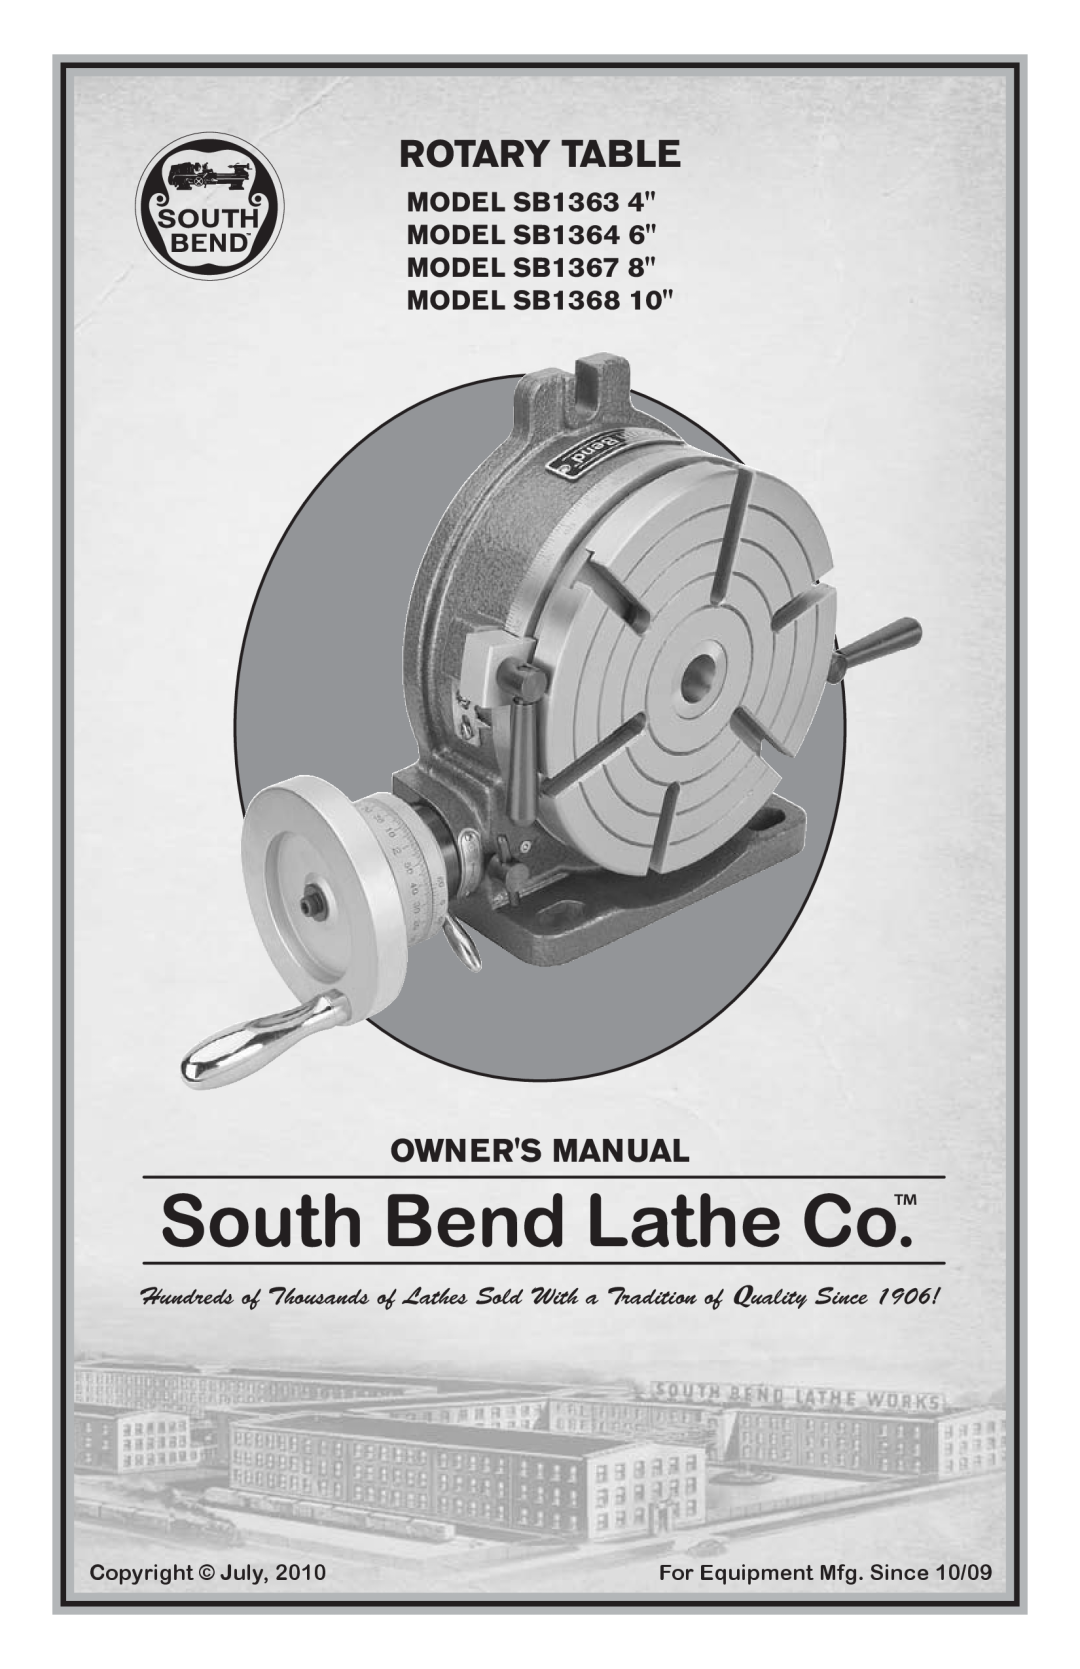 Southbend owner manual HEAVY 13 GEARHEAD LATHE, MODEL SB1049 13 X MODEL SB1050 13 X, Owners Manual 